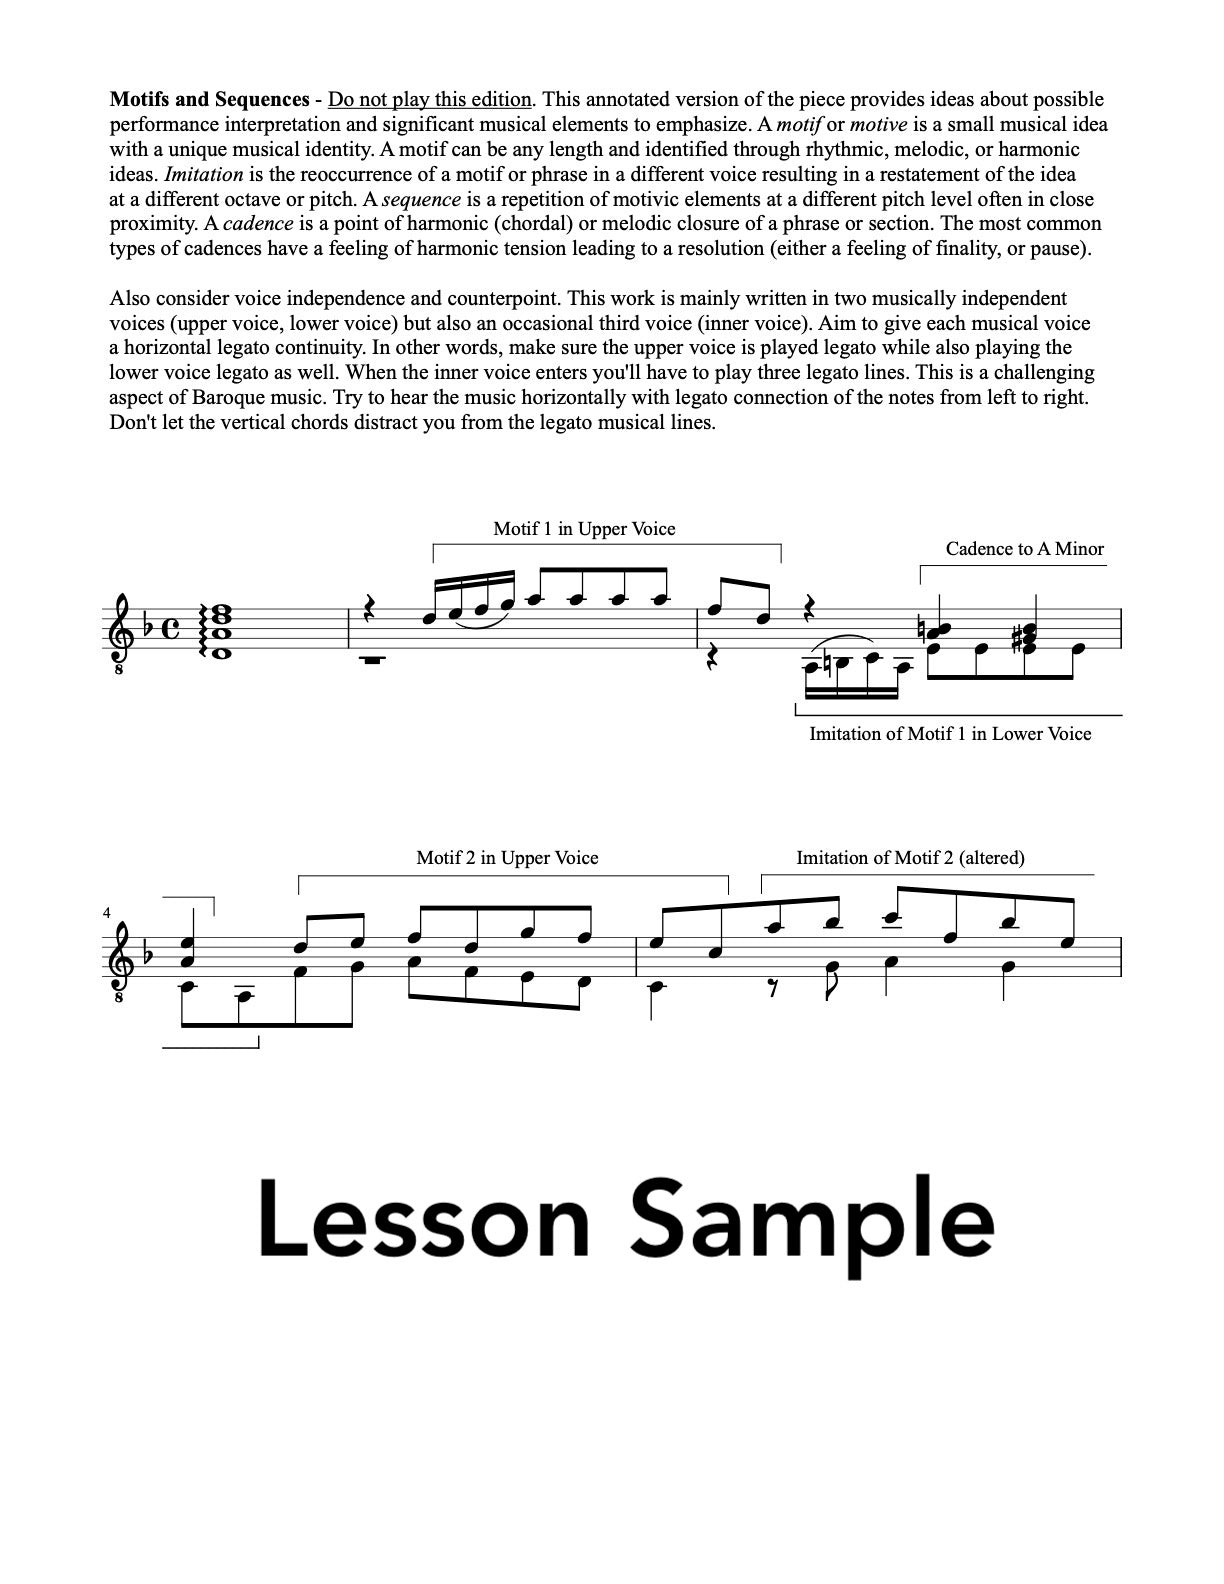 Lesson Sample - Classical Guitar Repertoire Lessons Grade 6 